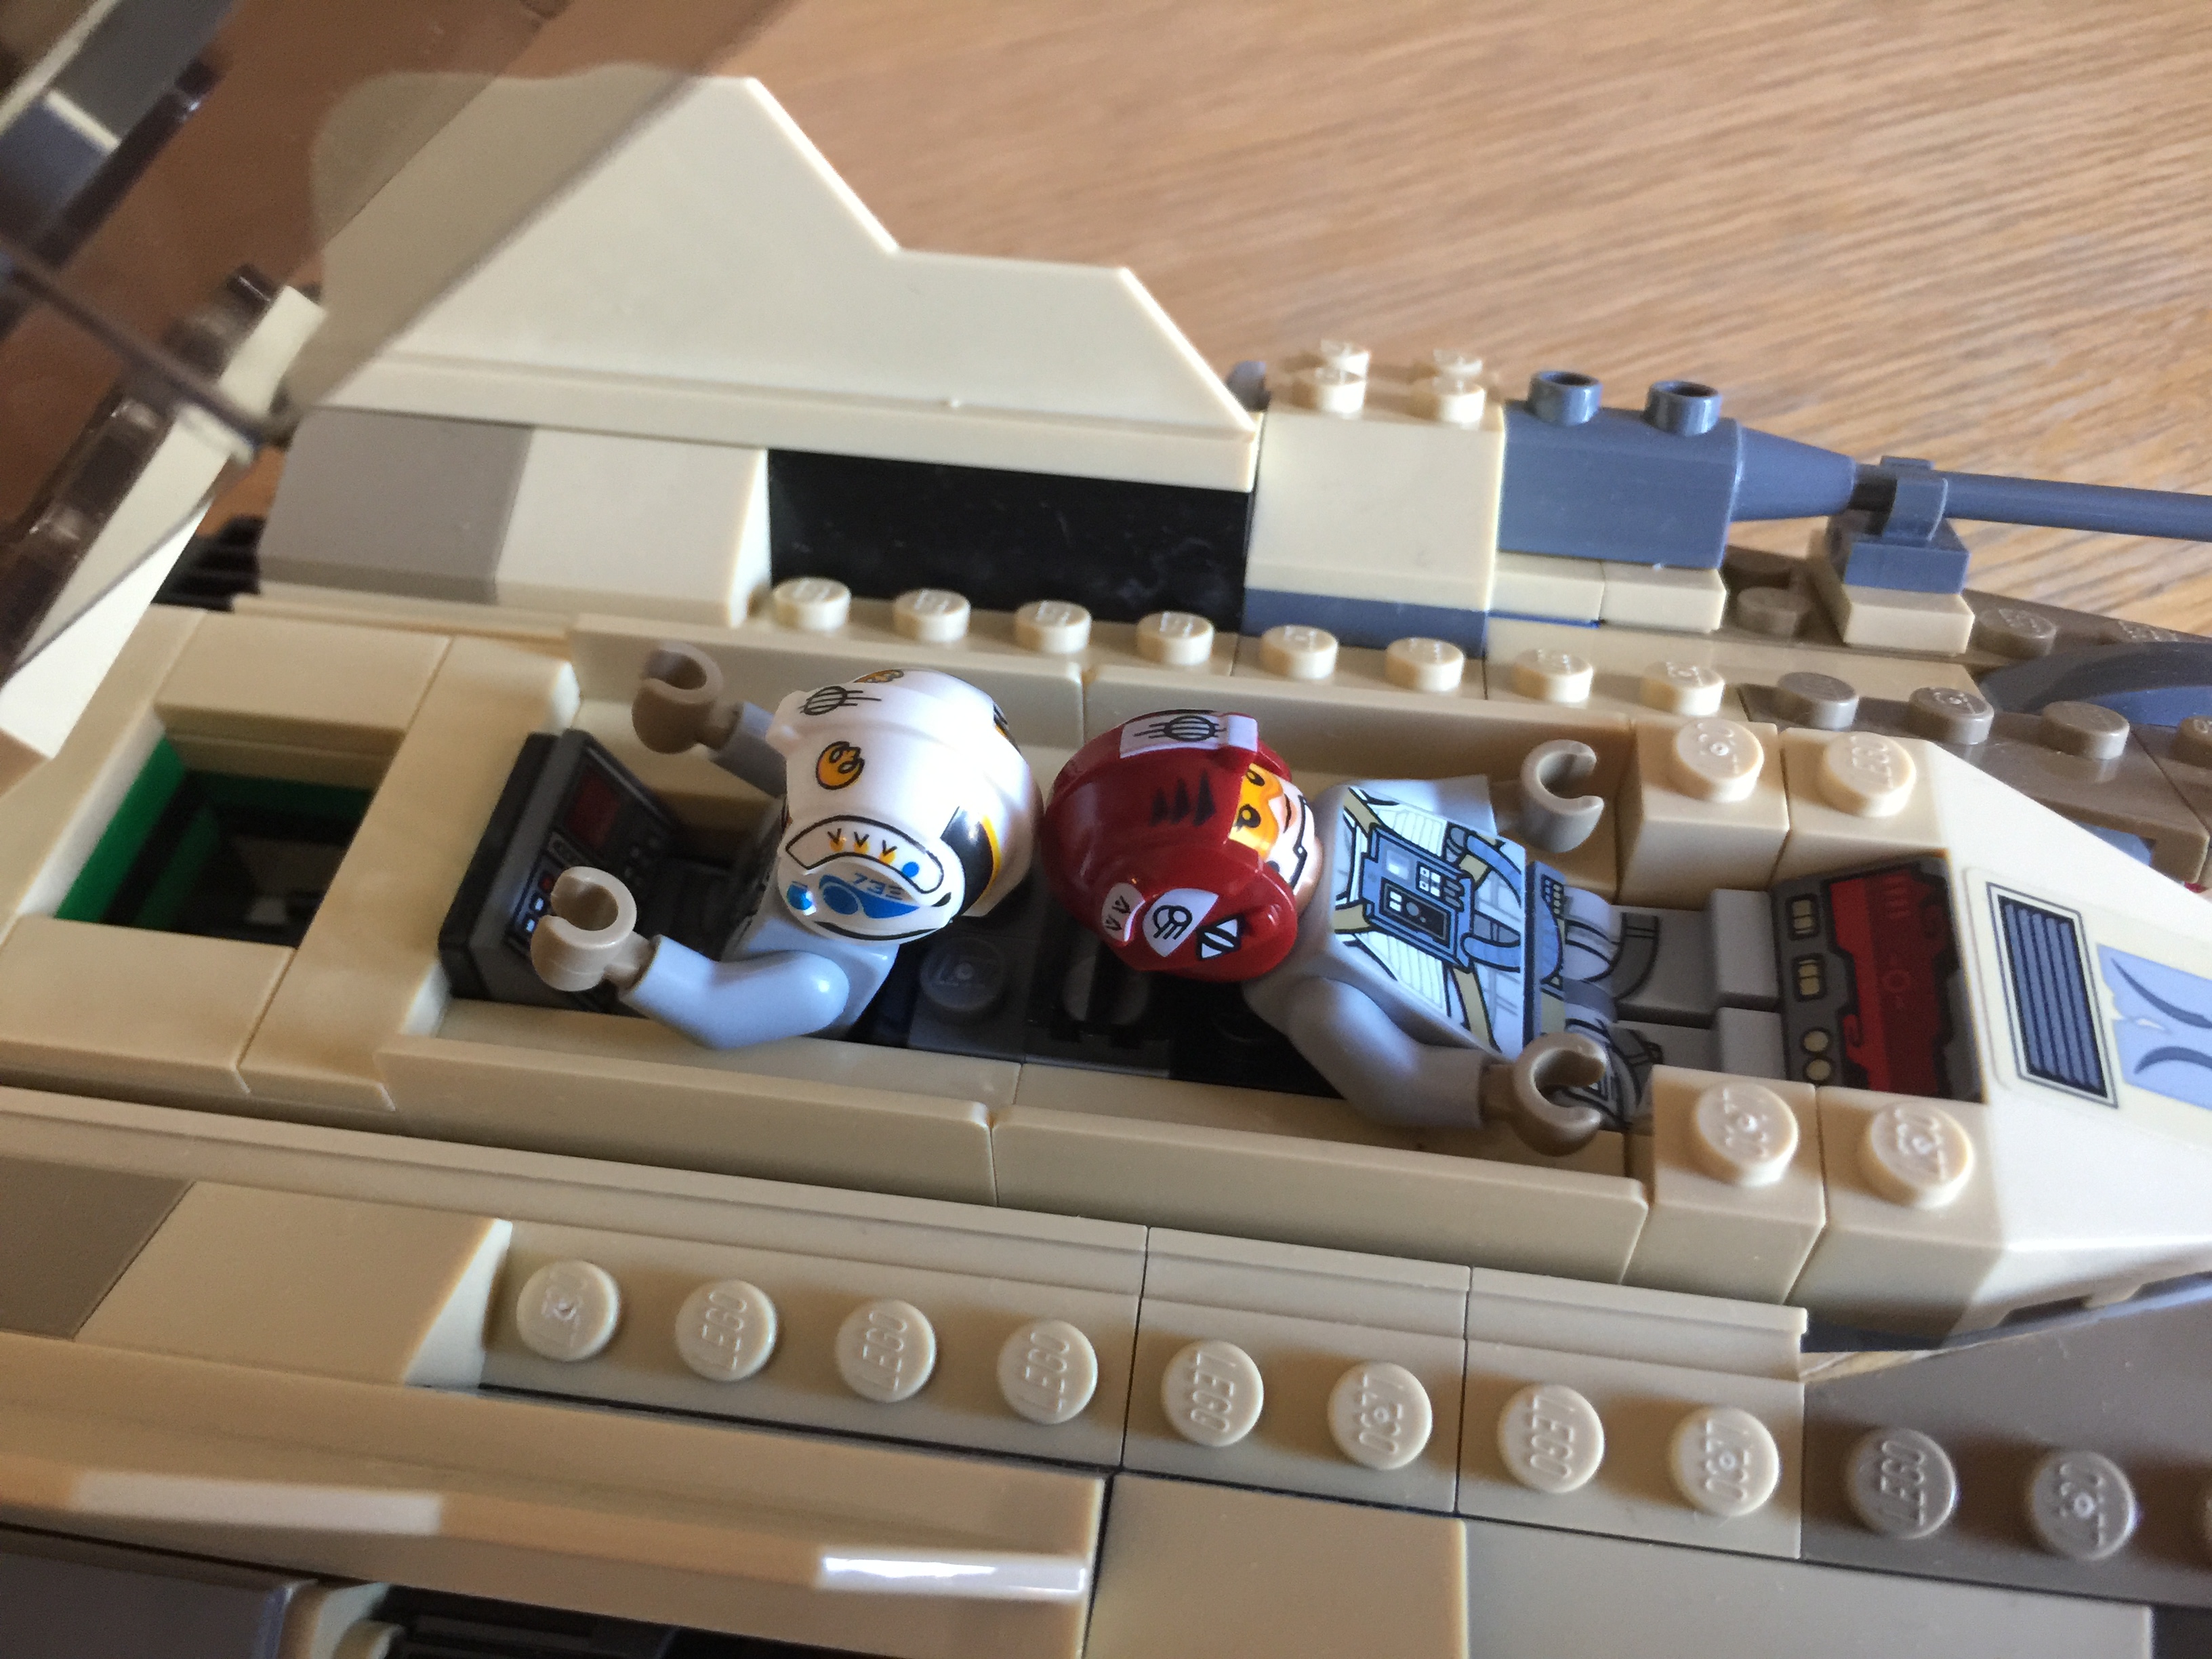 LEGO Star Wars 75204 Sandspeeder revealed from The Last Jedi [News